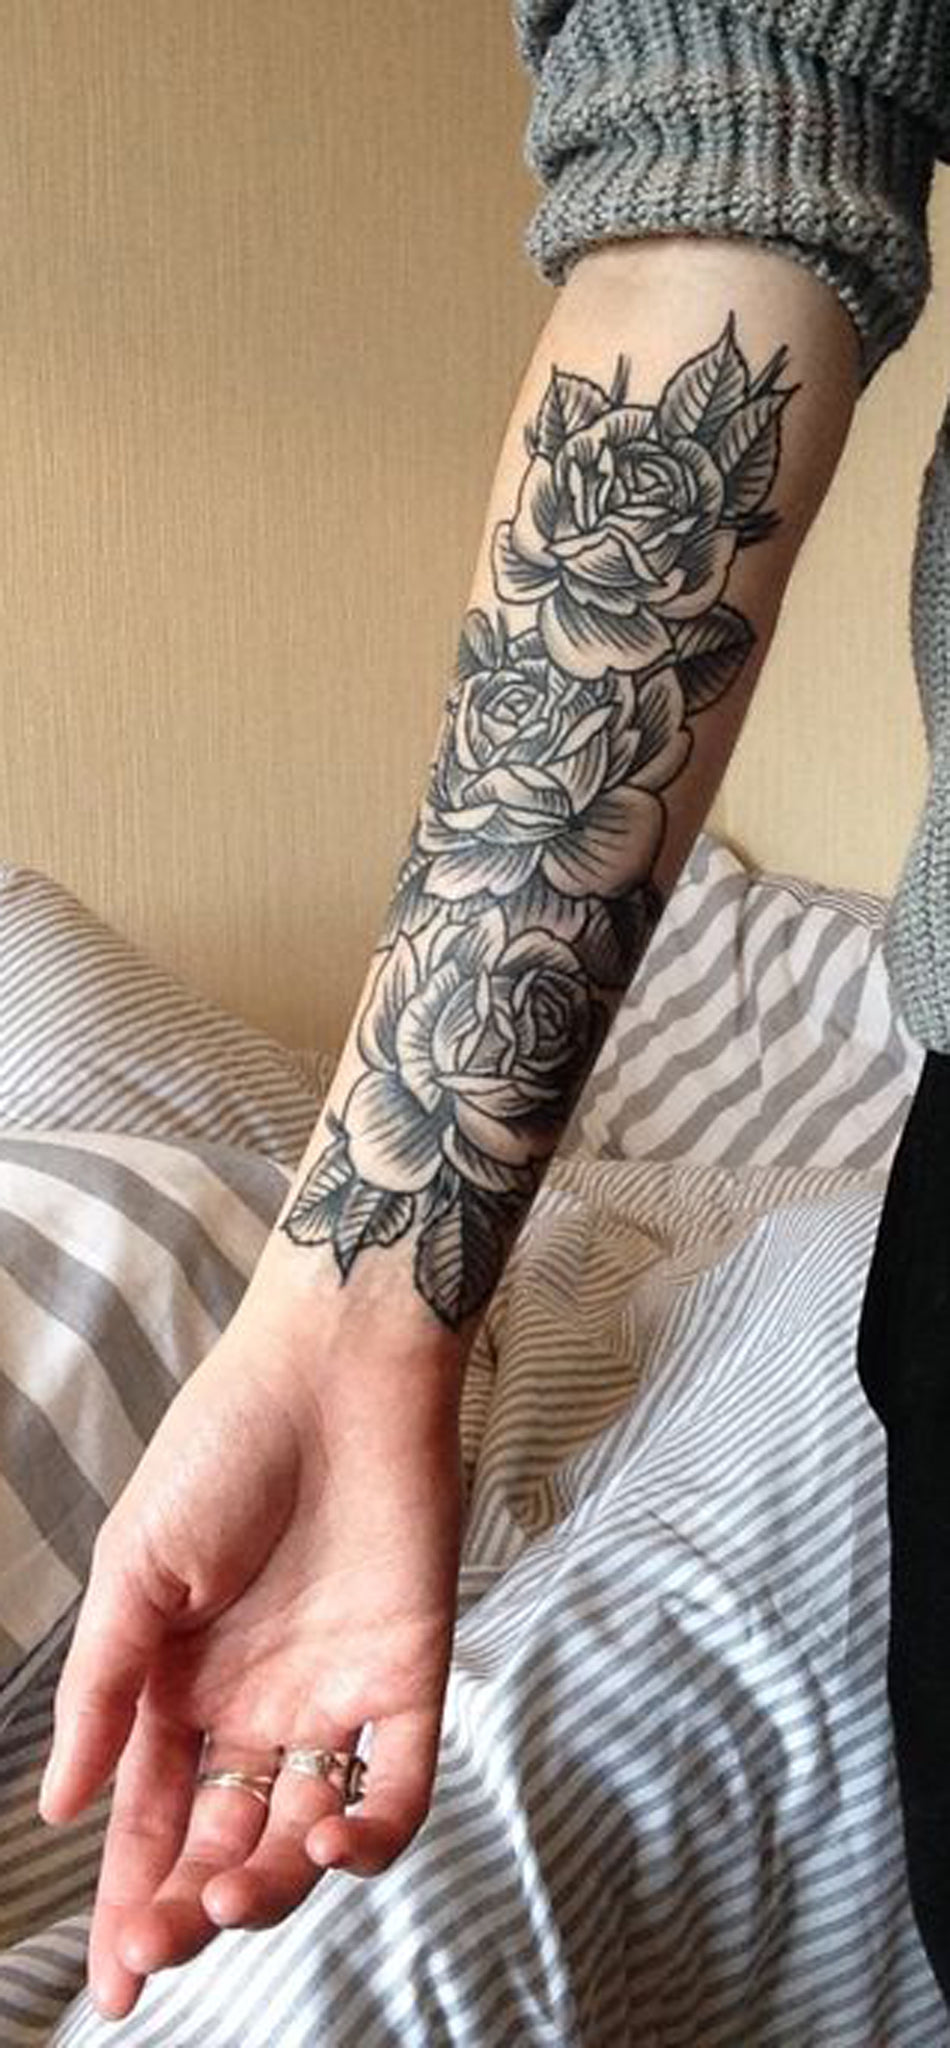 flower tattoo forearm sleeve